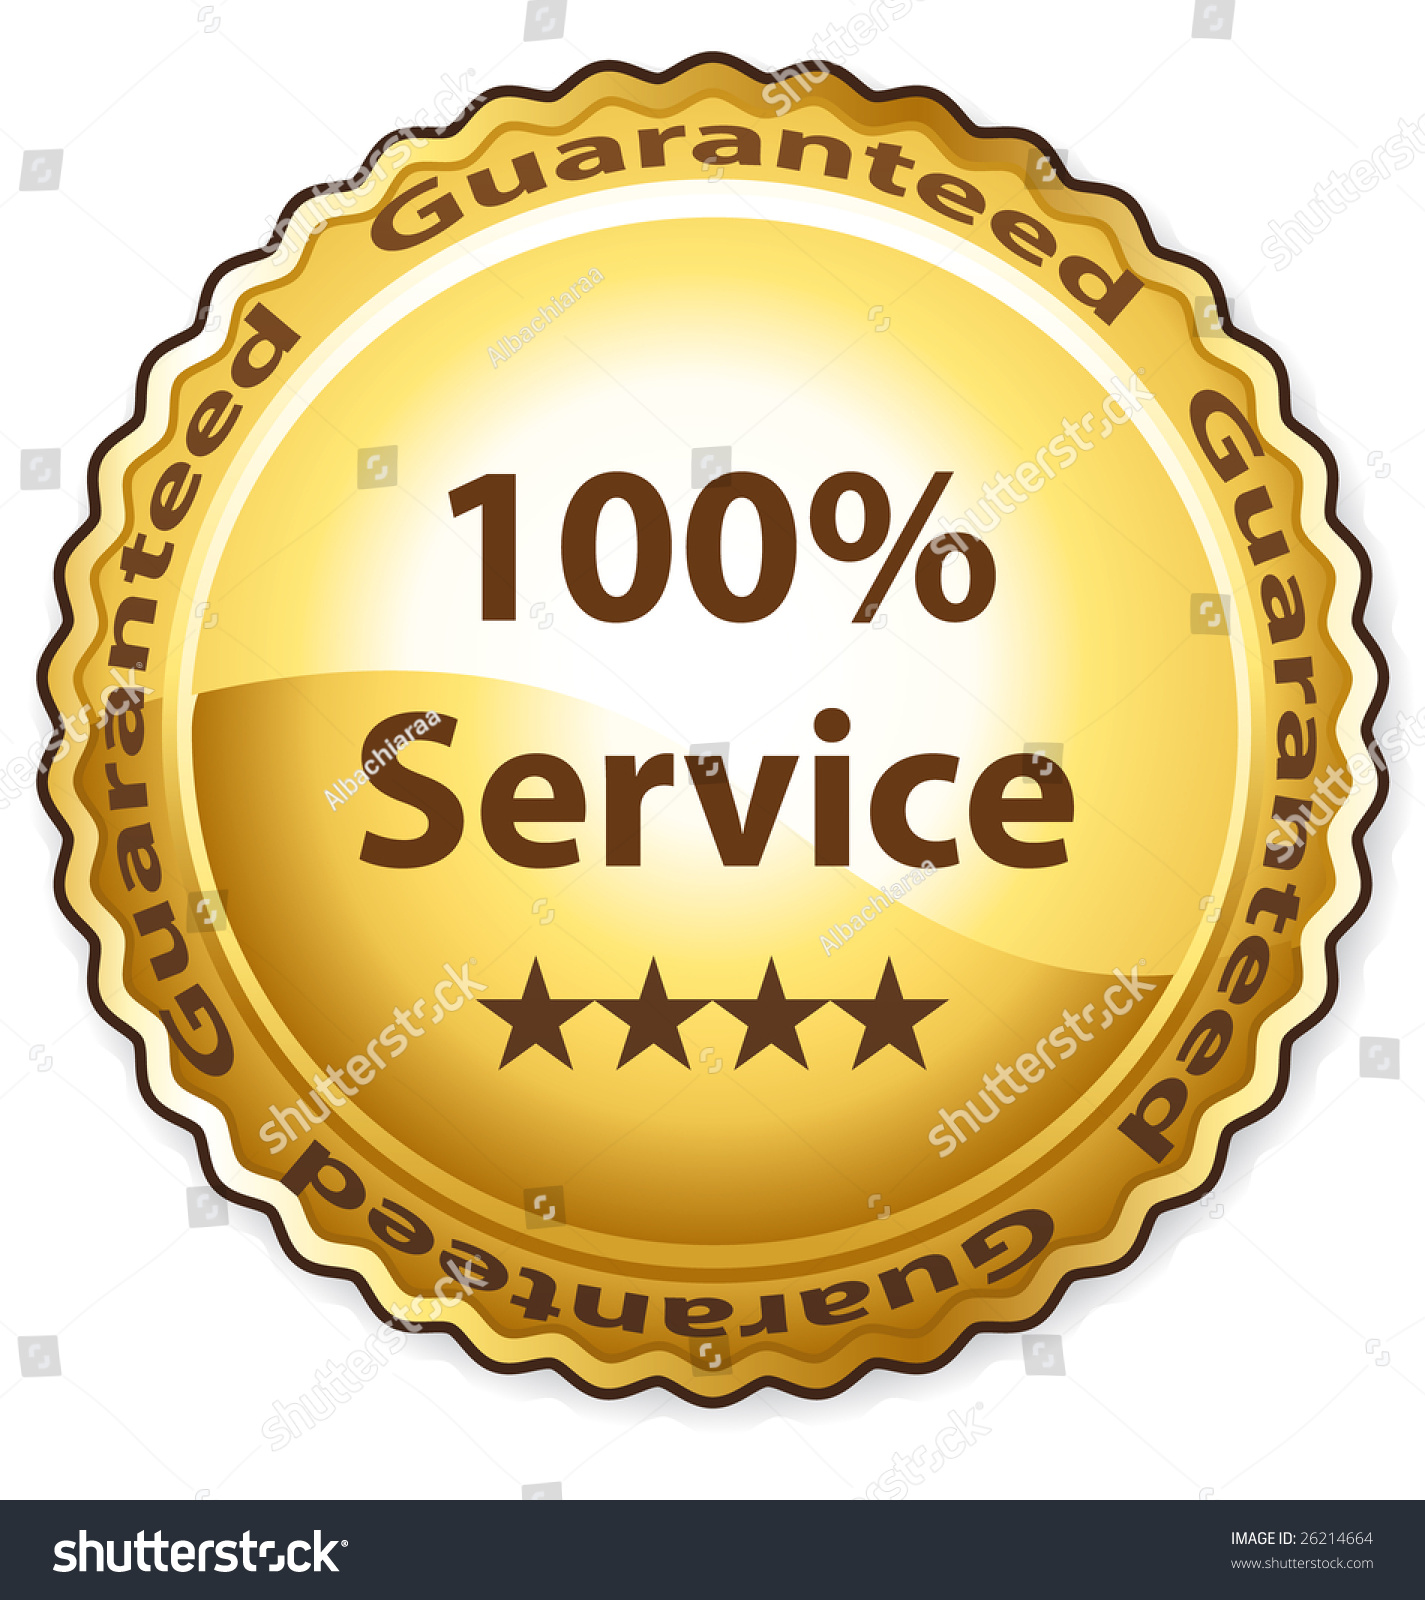 100 Service Guarantee Label Stock Photo 26214664 Shutterstock